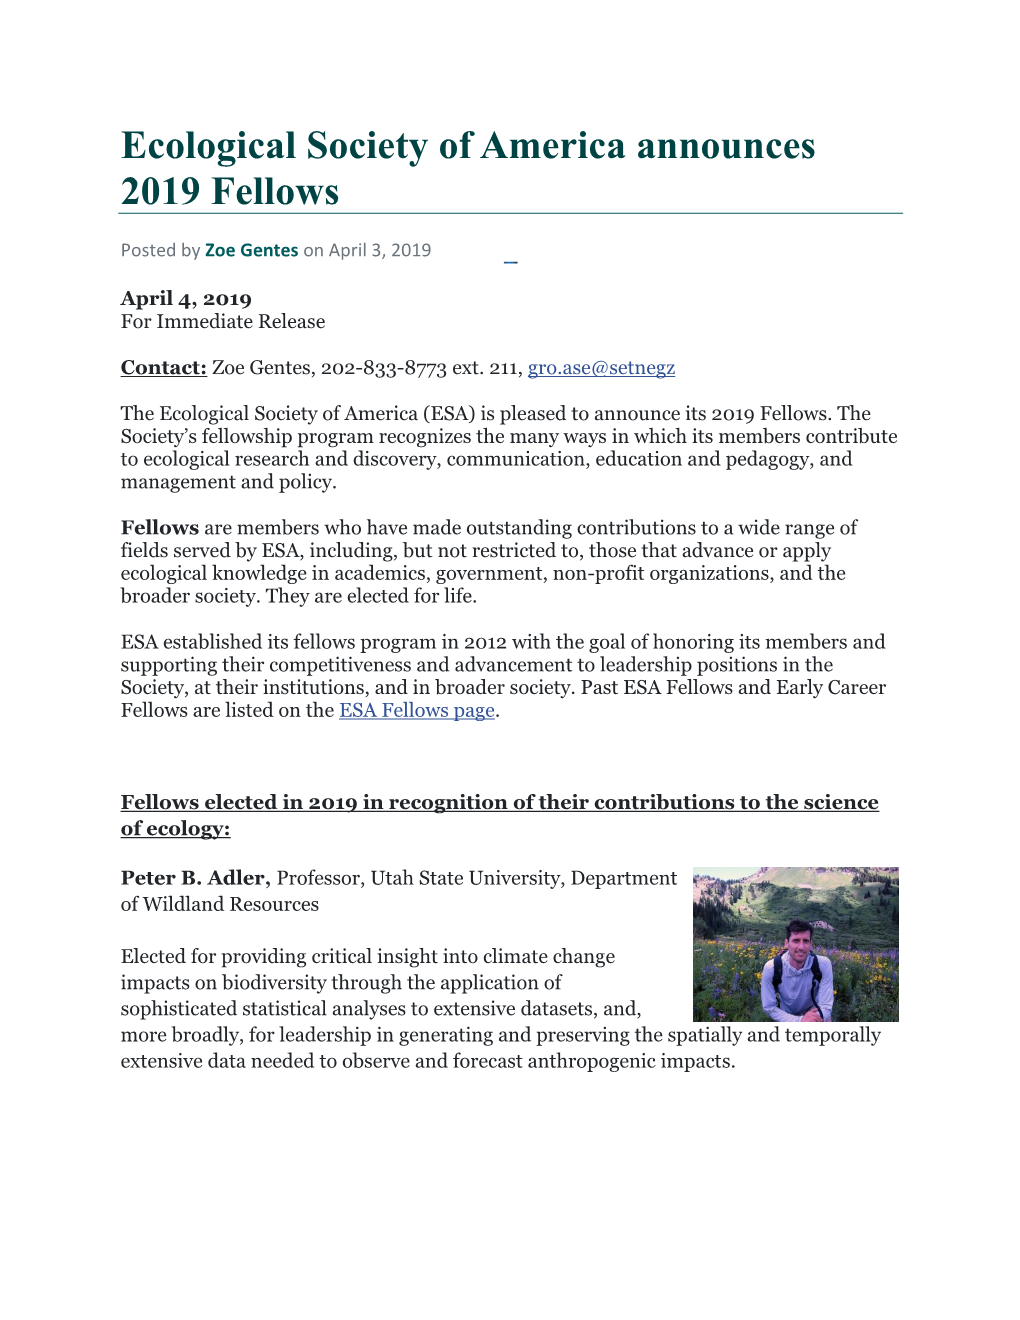 Ecological Society of America Announces 2019 Fellows